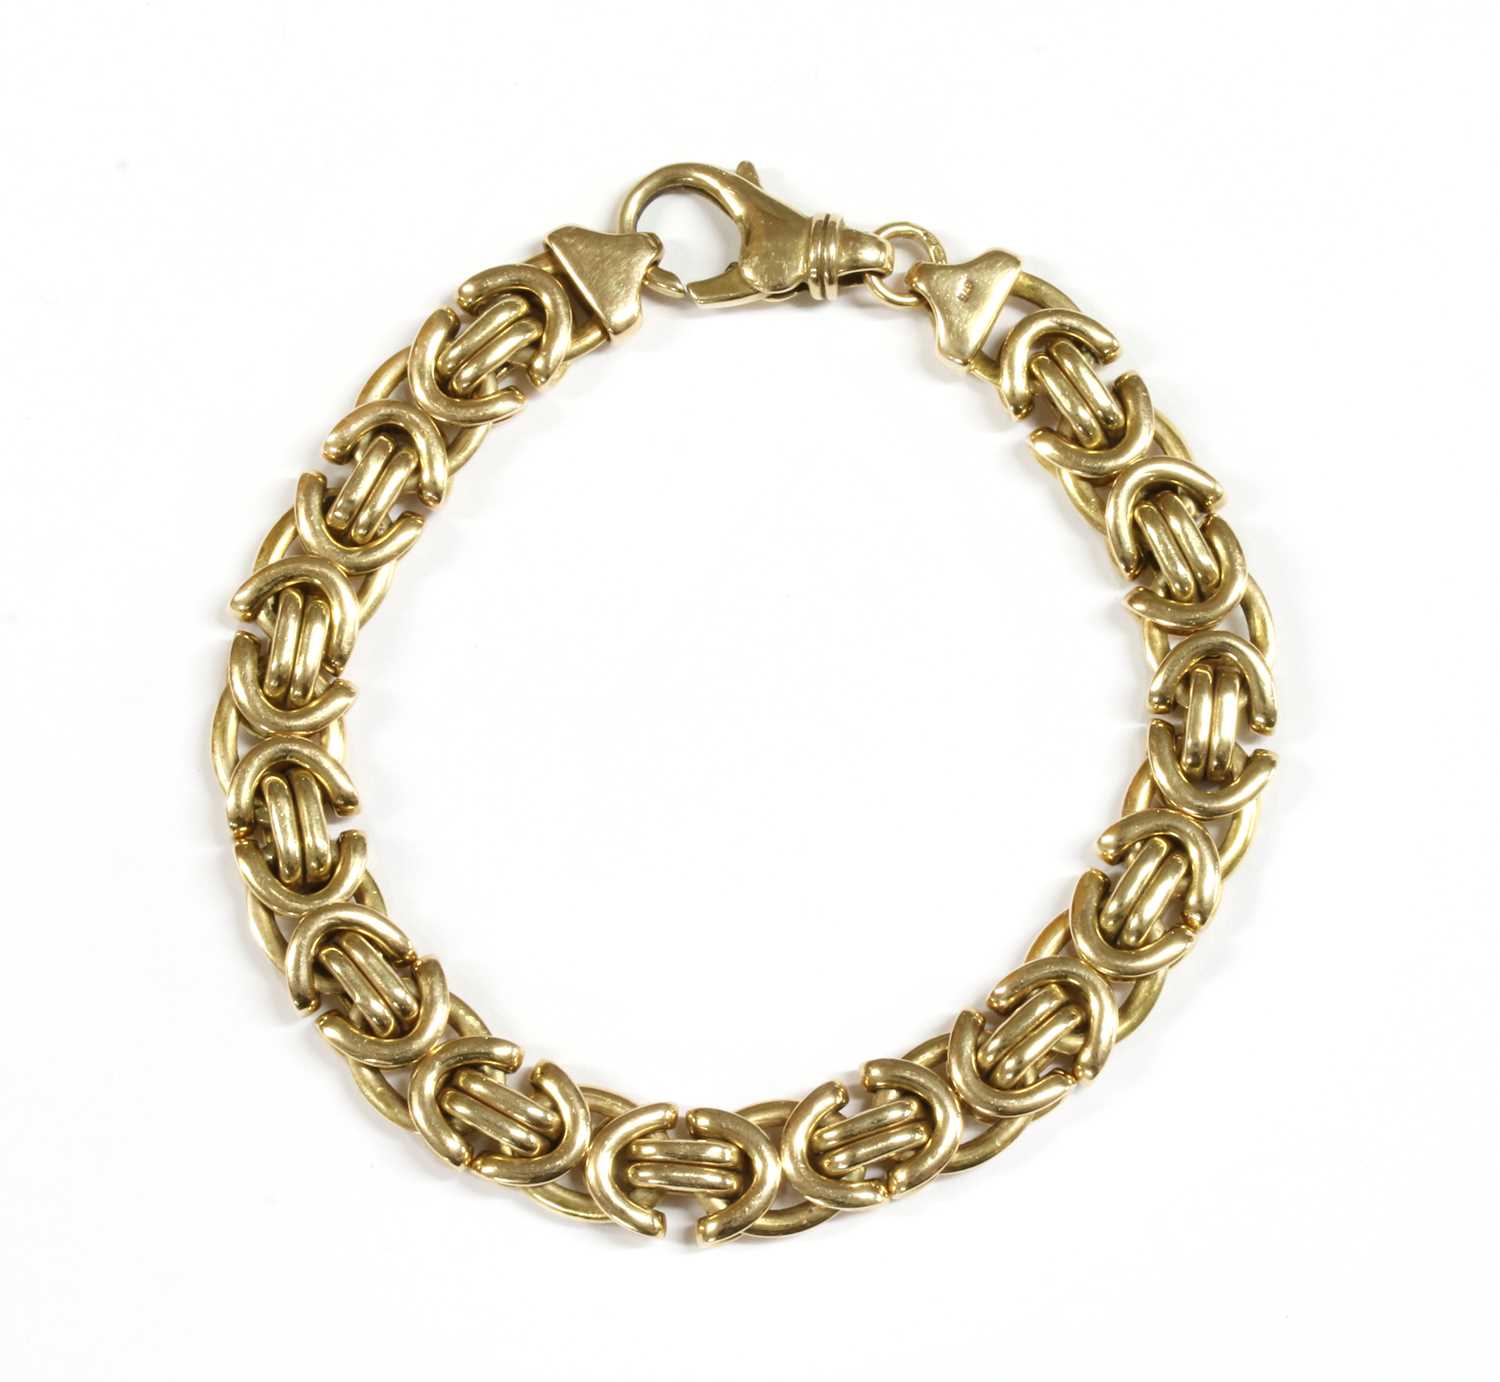 Lot 108 - A 9ct gold bracelet